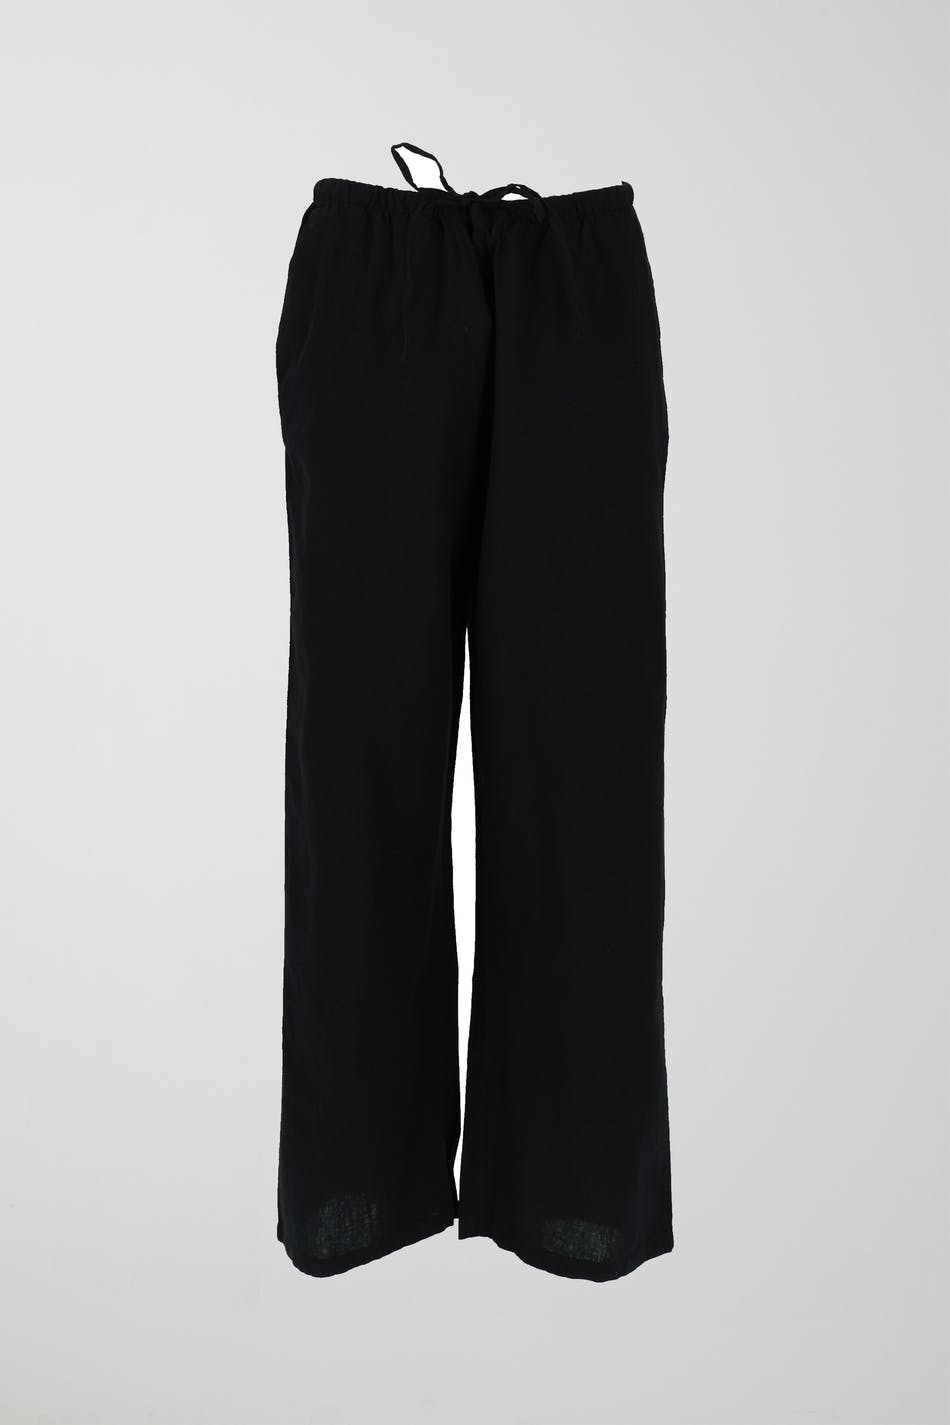 Gina Tricot - Petite linen blend trousers - linnebyxor - Black - XS - Female